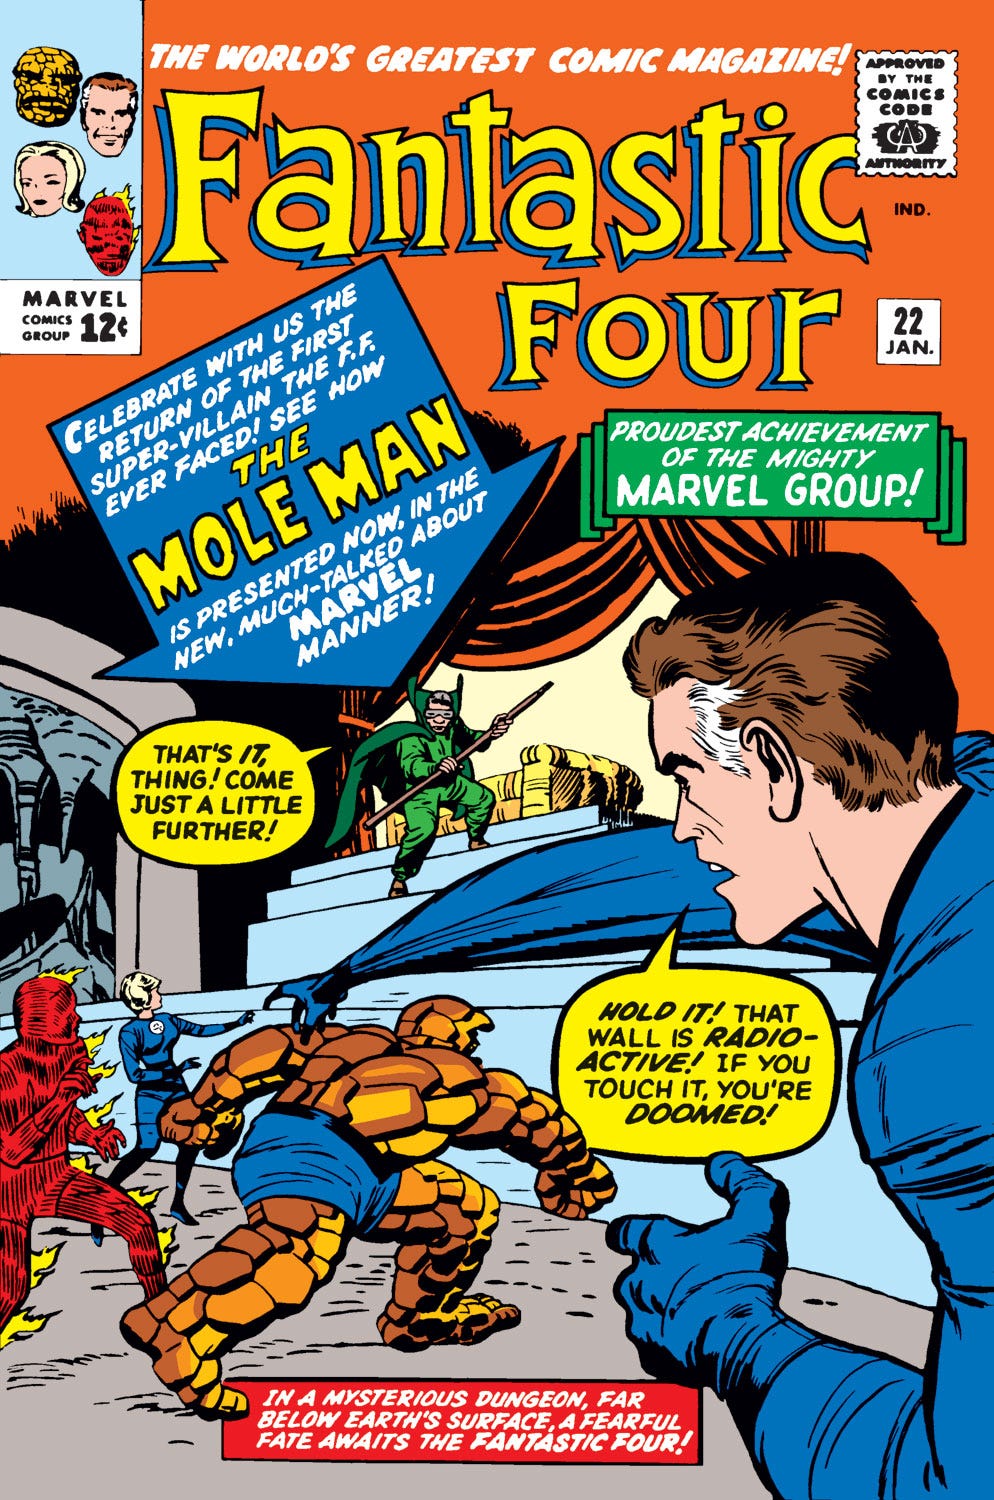 Fantastic Four (1961) #22 | Comic Issues | Marvel